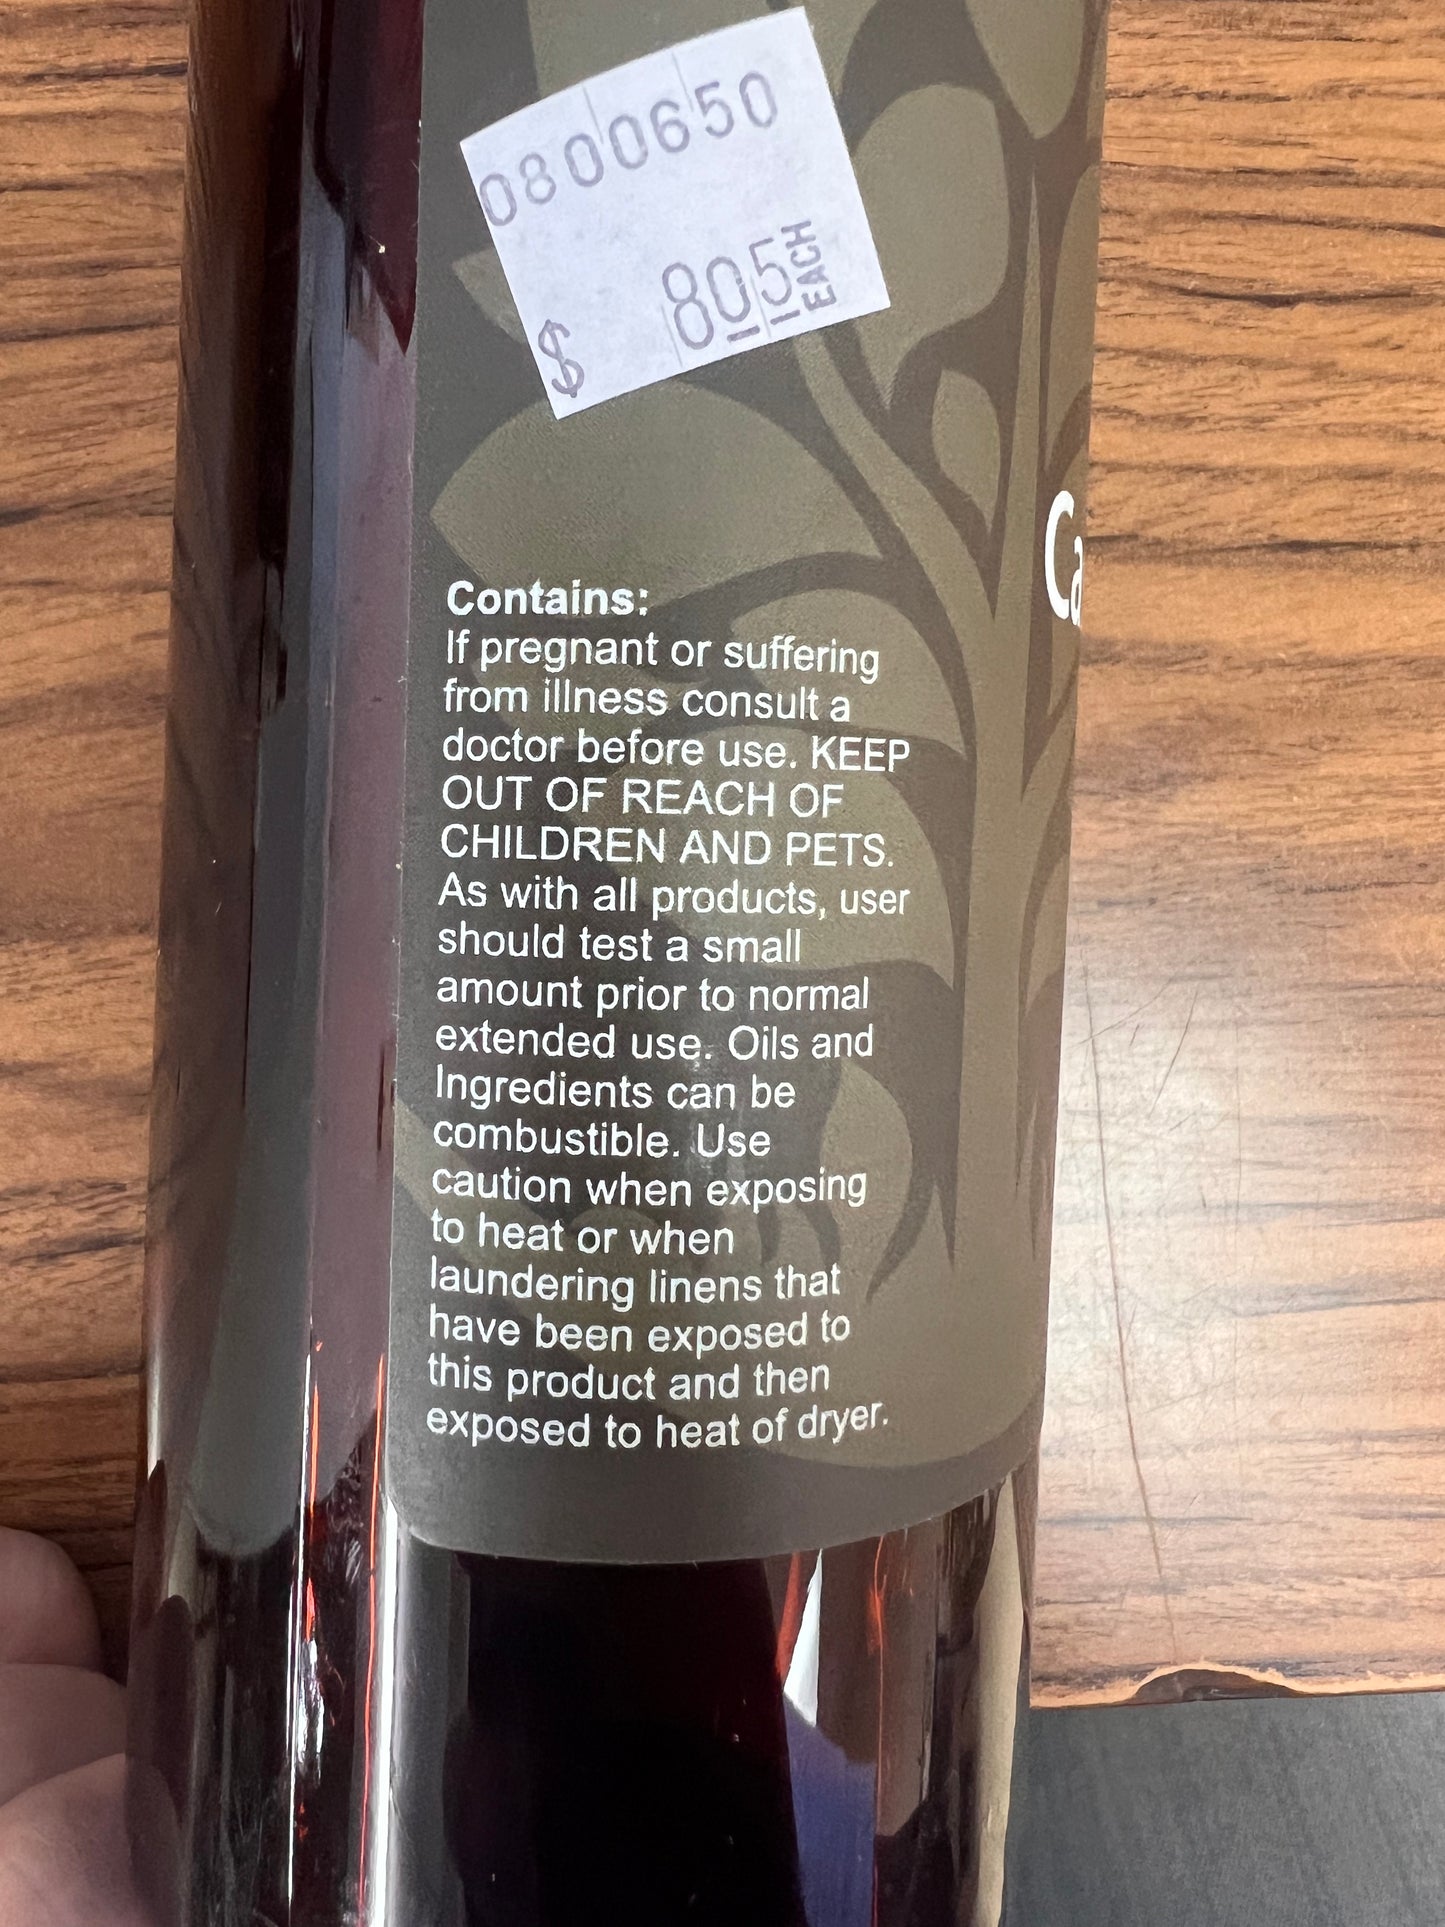 Castor Oil Nature's Way 16fl. oz (please note item image says 15fl oz, we are selling the 16fl oz bottle)